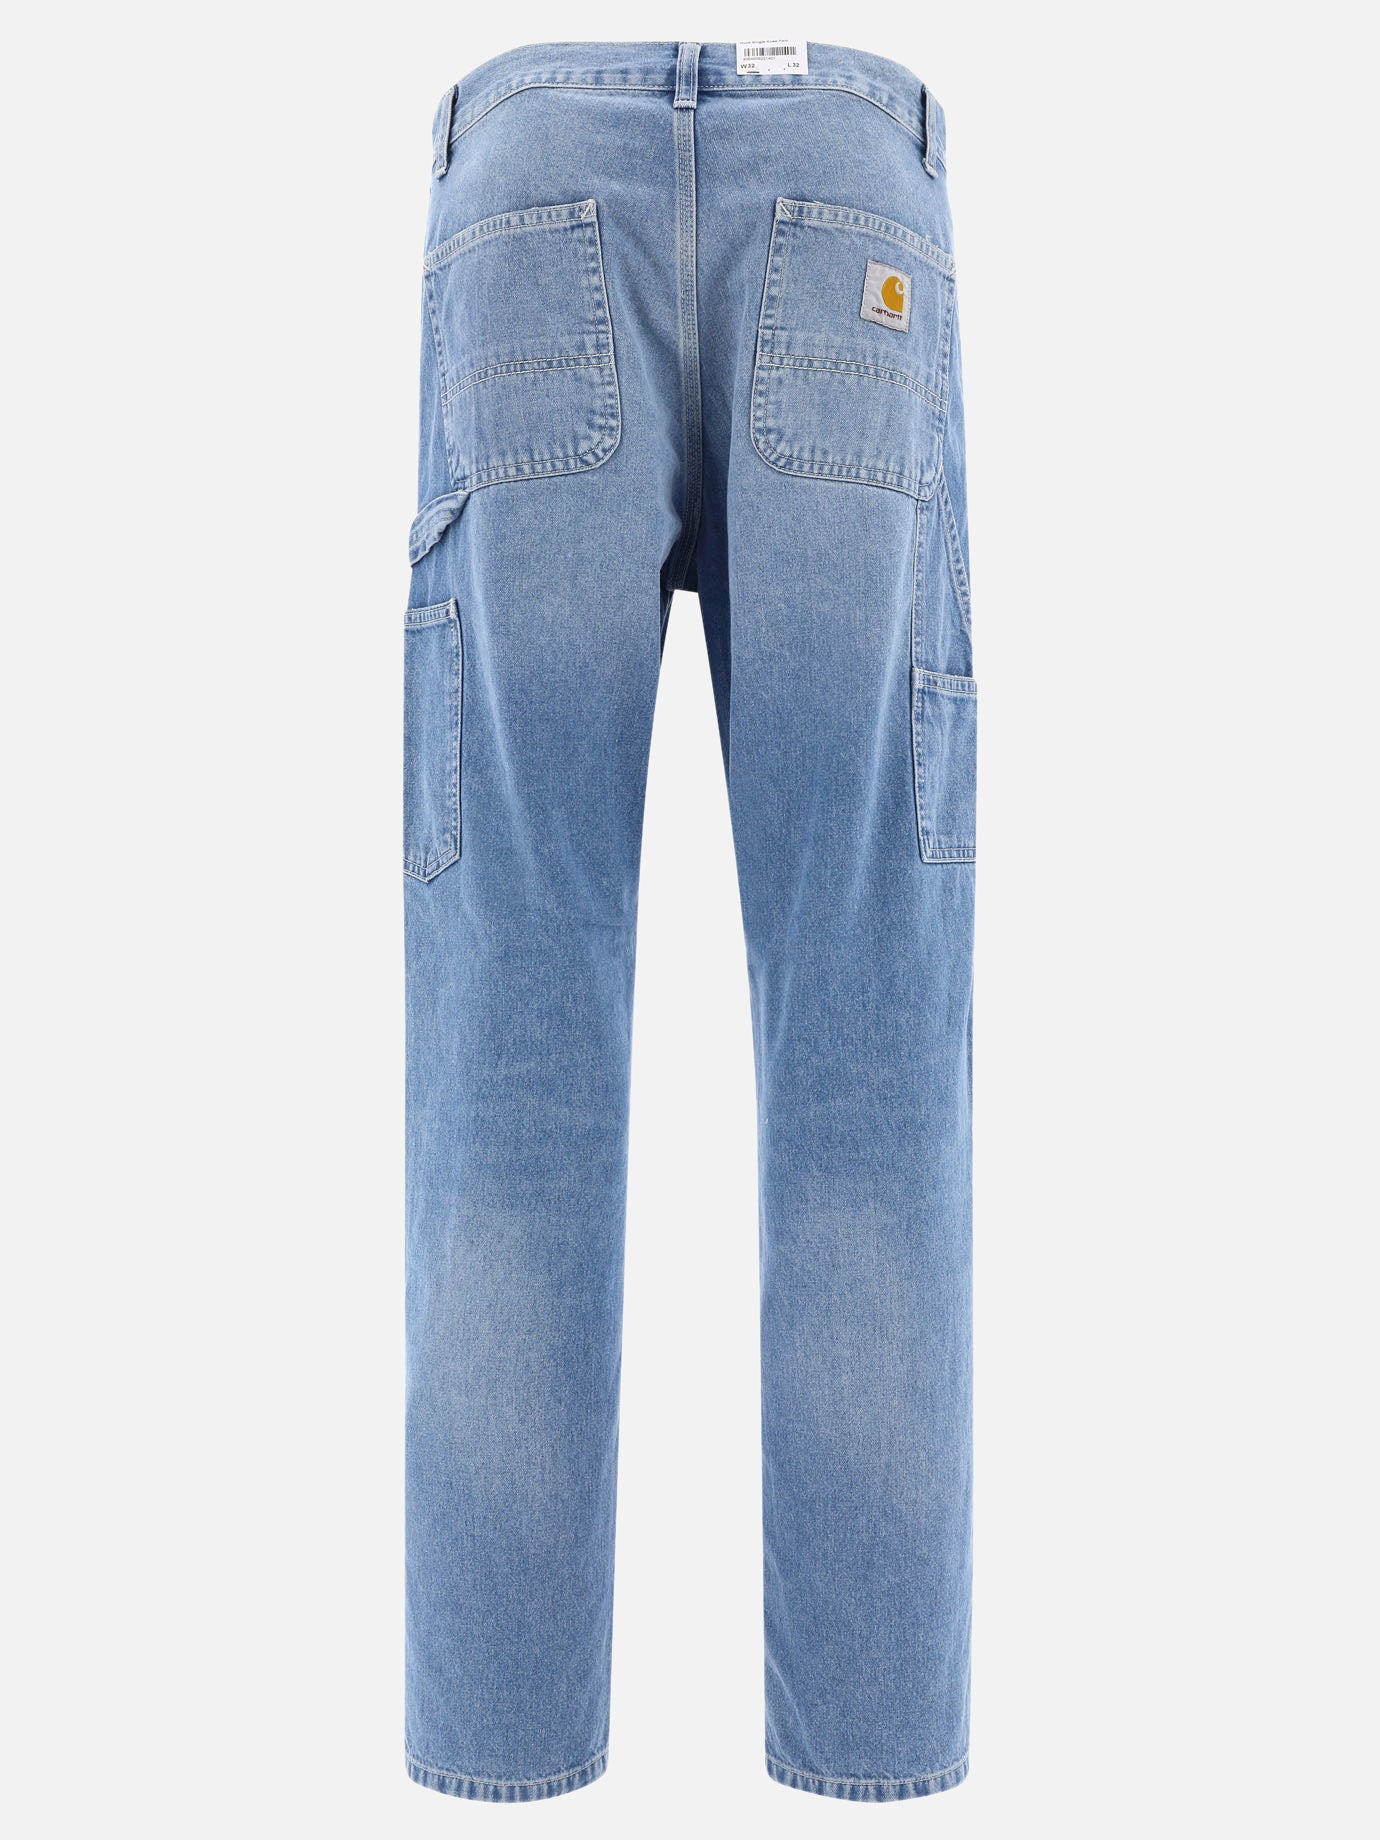 "Ruck Single Knee" jeans